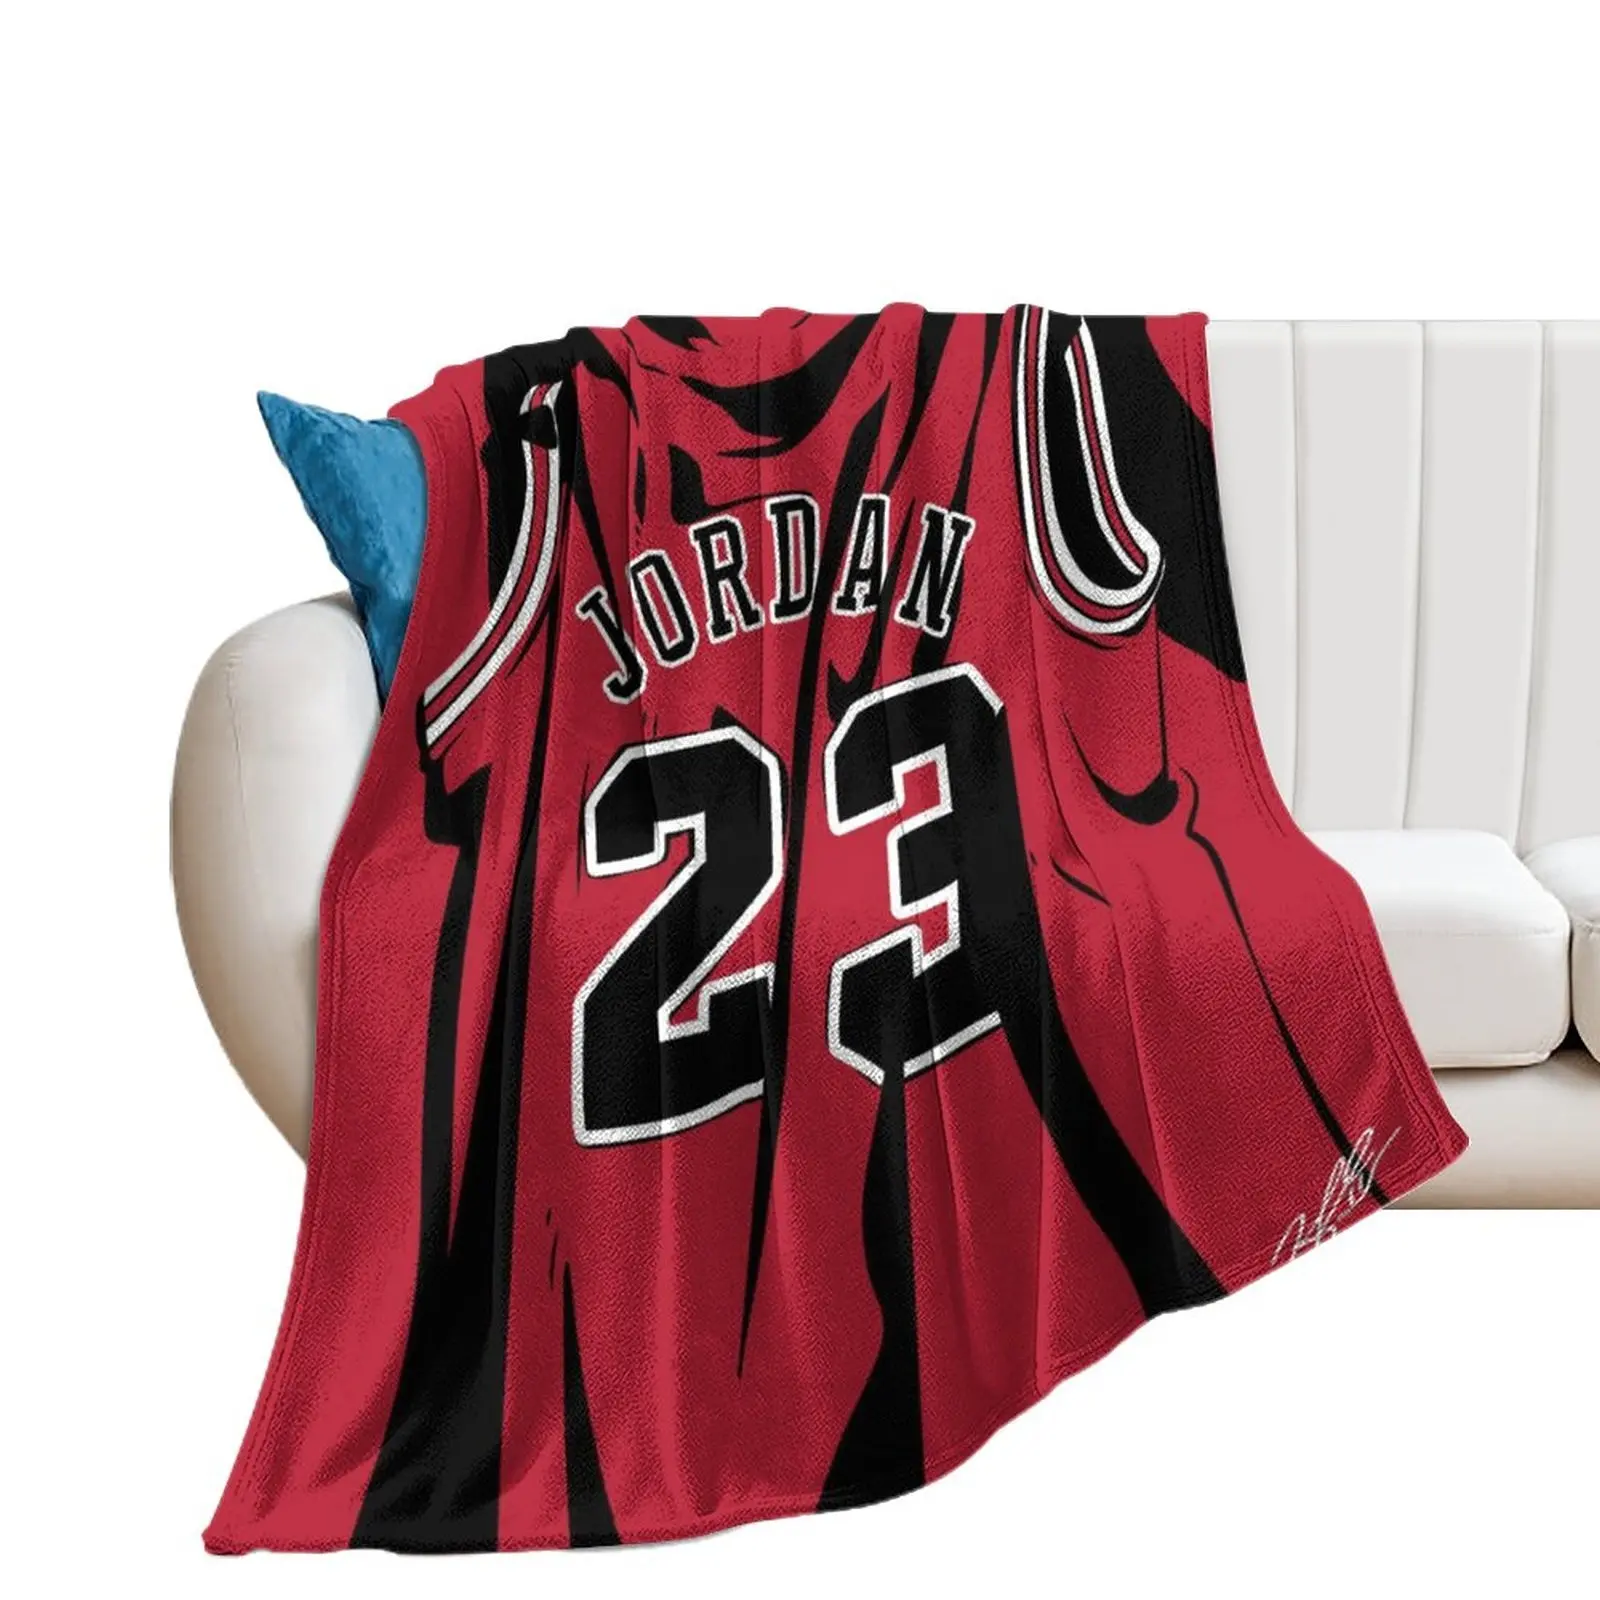 Coperte personalizzate coperta in pelliccia sintetica NBA Jordans Kobe Fans regali basket Jersey coperte in pile